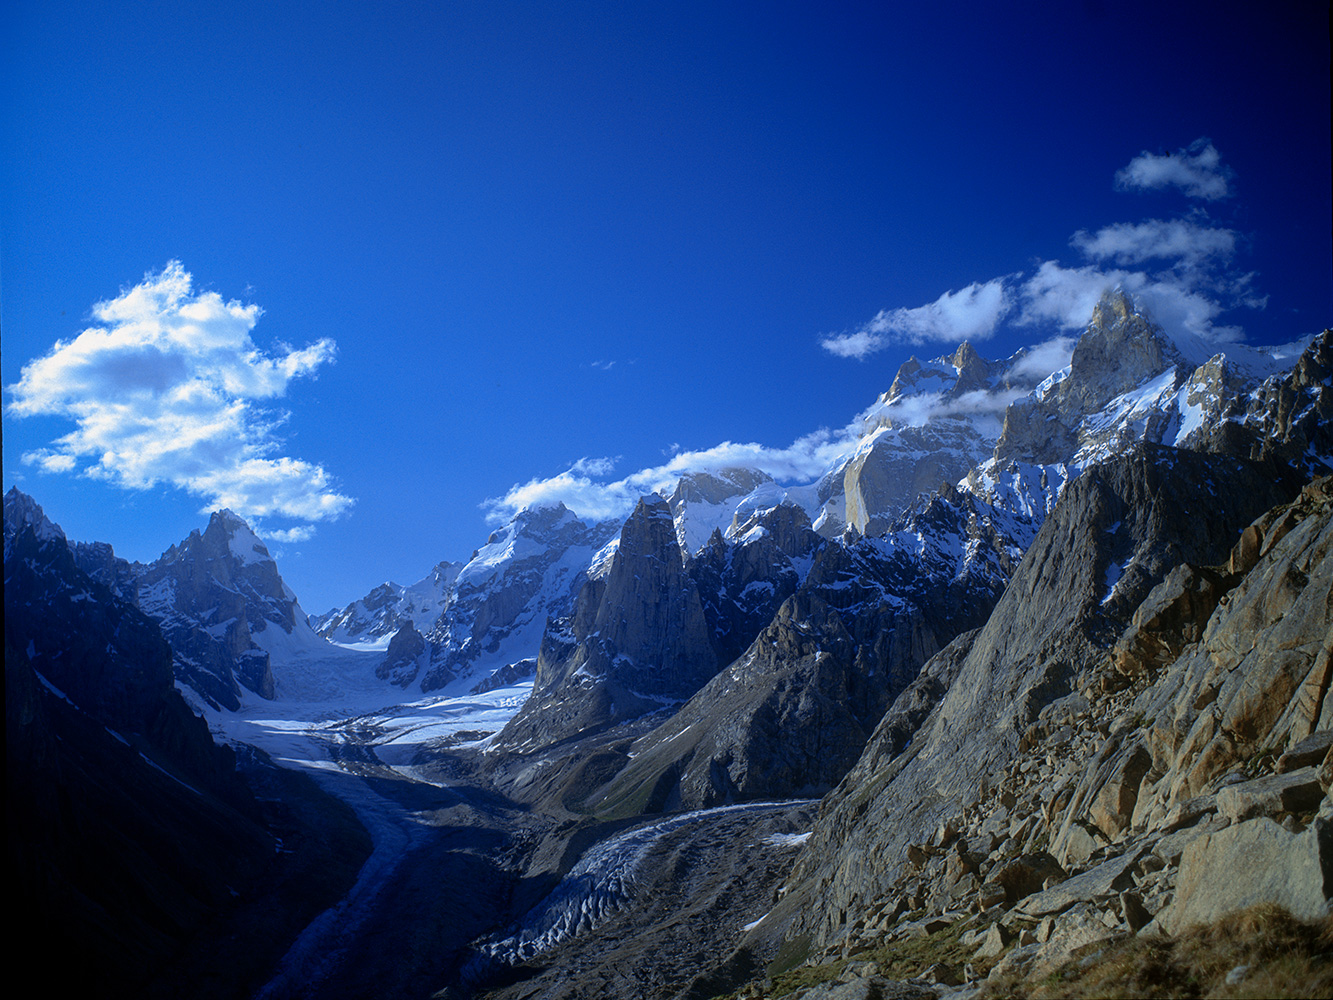 Seen from a small summit above Baintha camp, with the Uzun Brakk glacier below